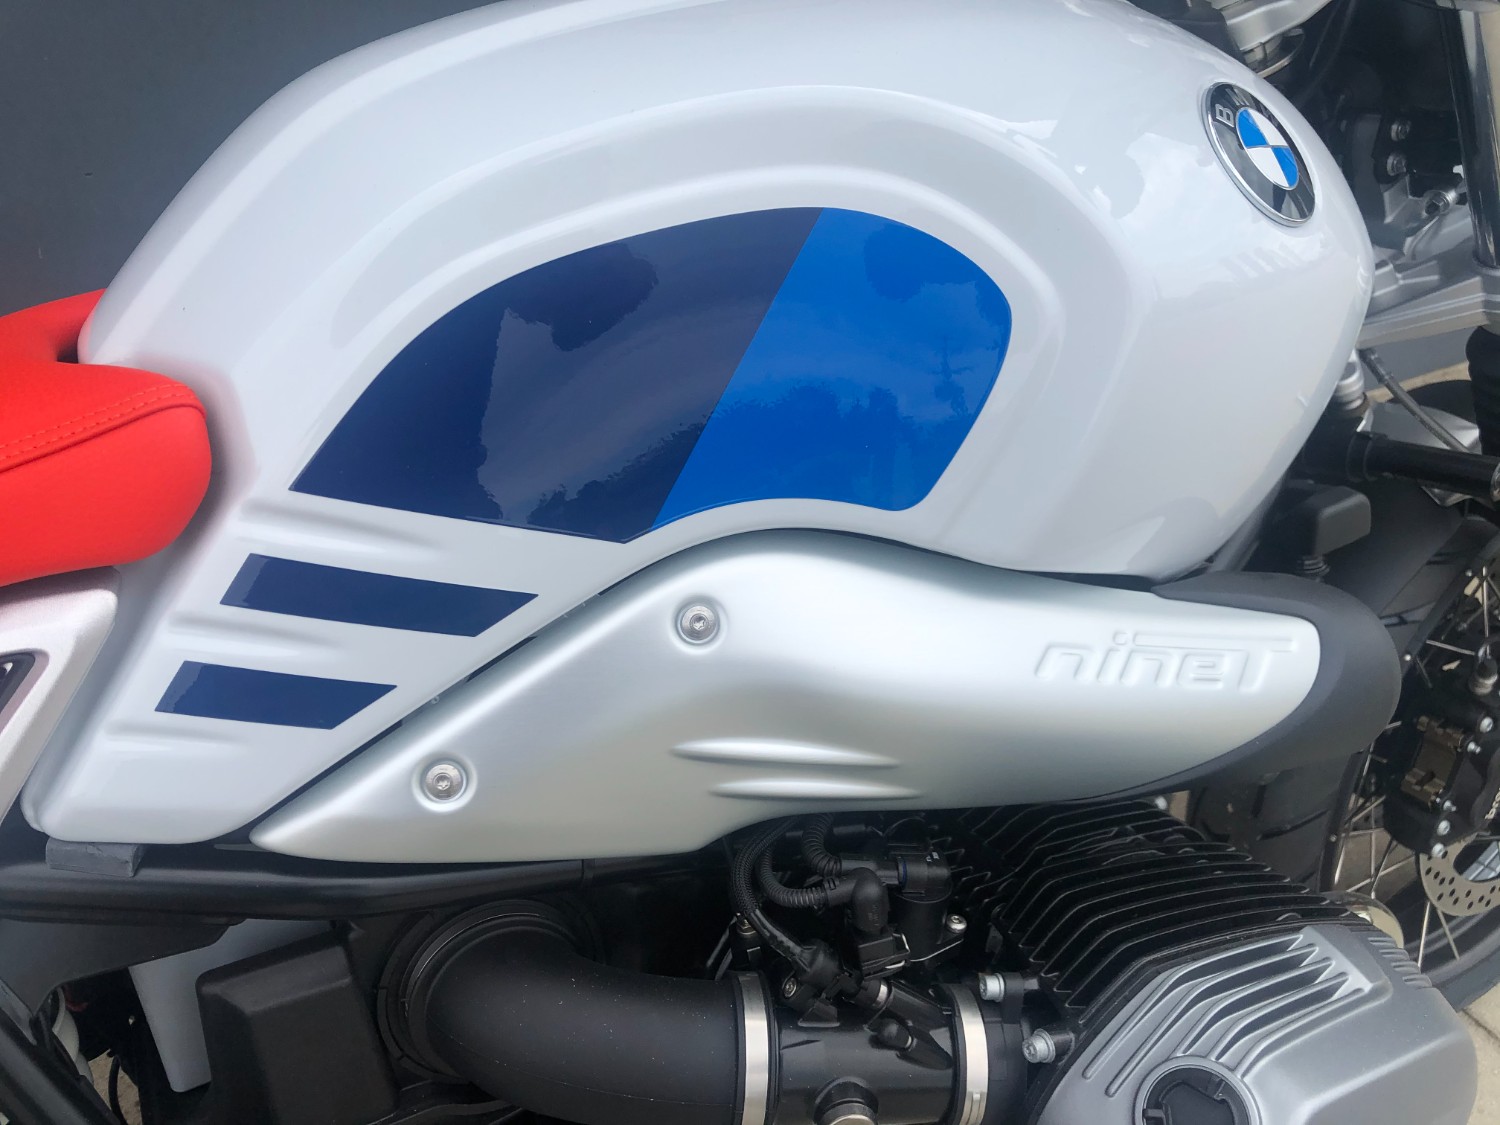 2020 BMW R Nine T Urban G/S Motorcycle Image 9